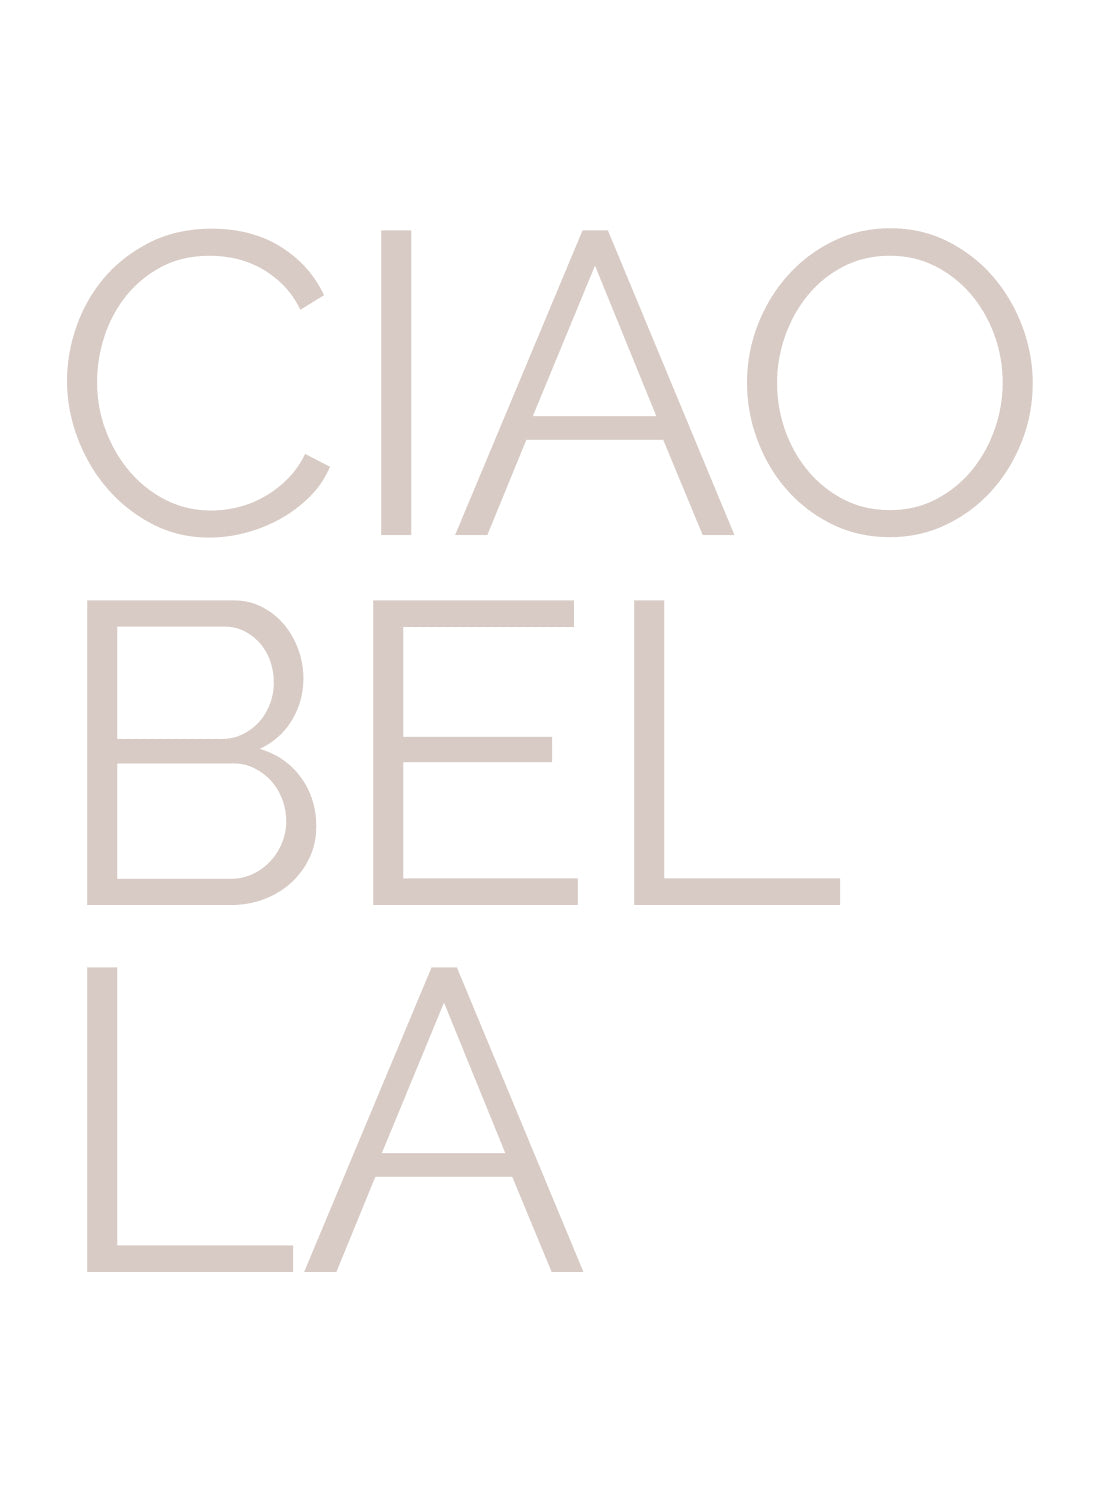 Ciao Bella Beige Poster